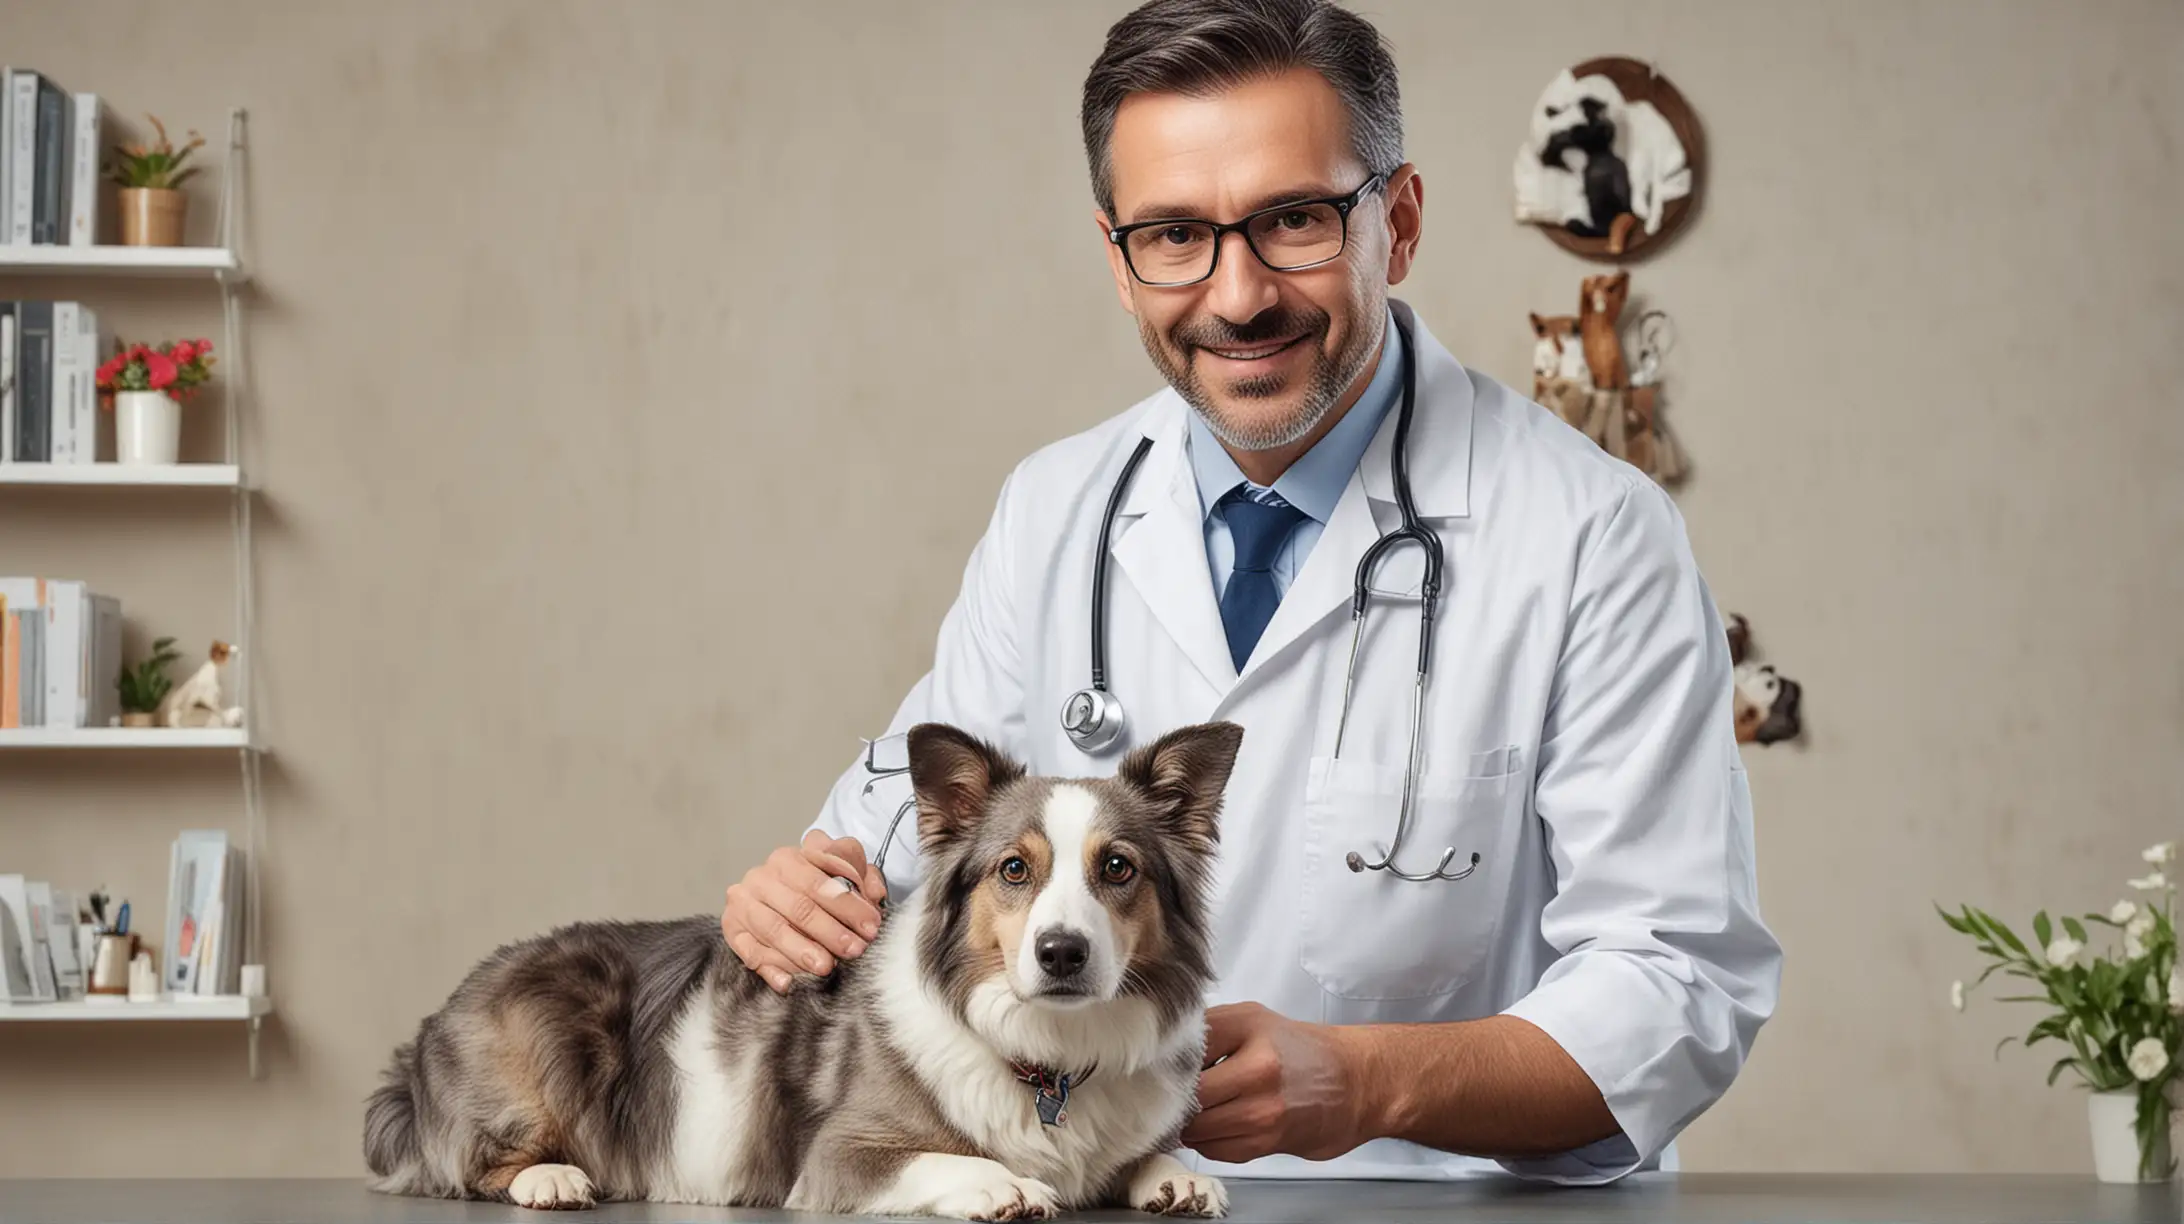 Experienced Veterinarian Examining Pet in Veterinary Clinic